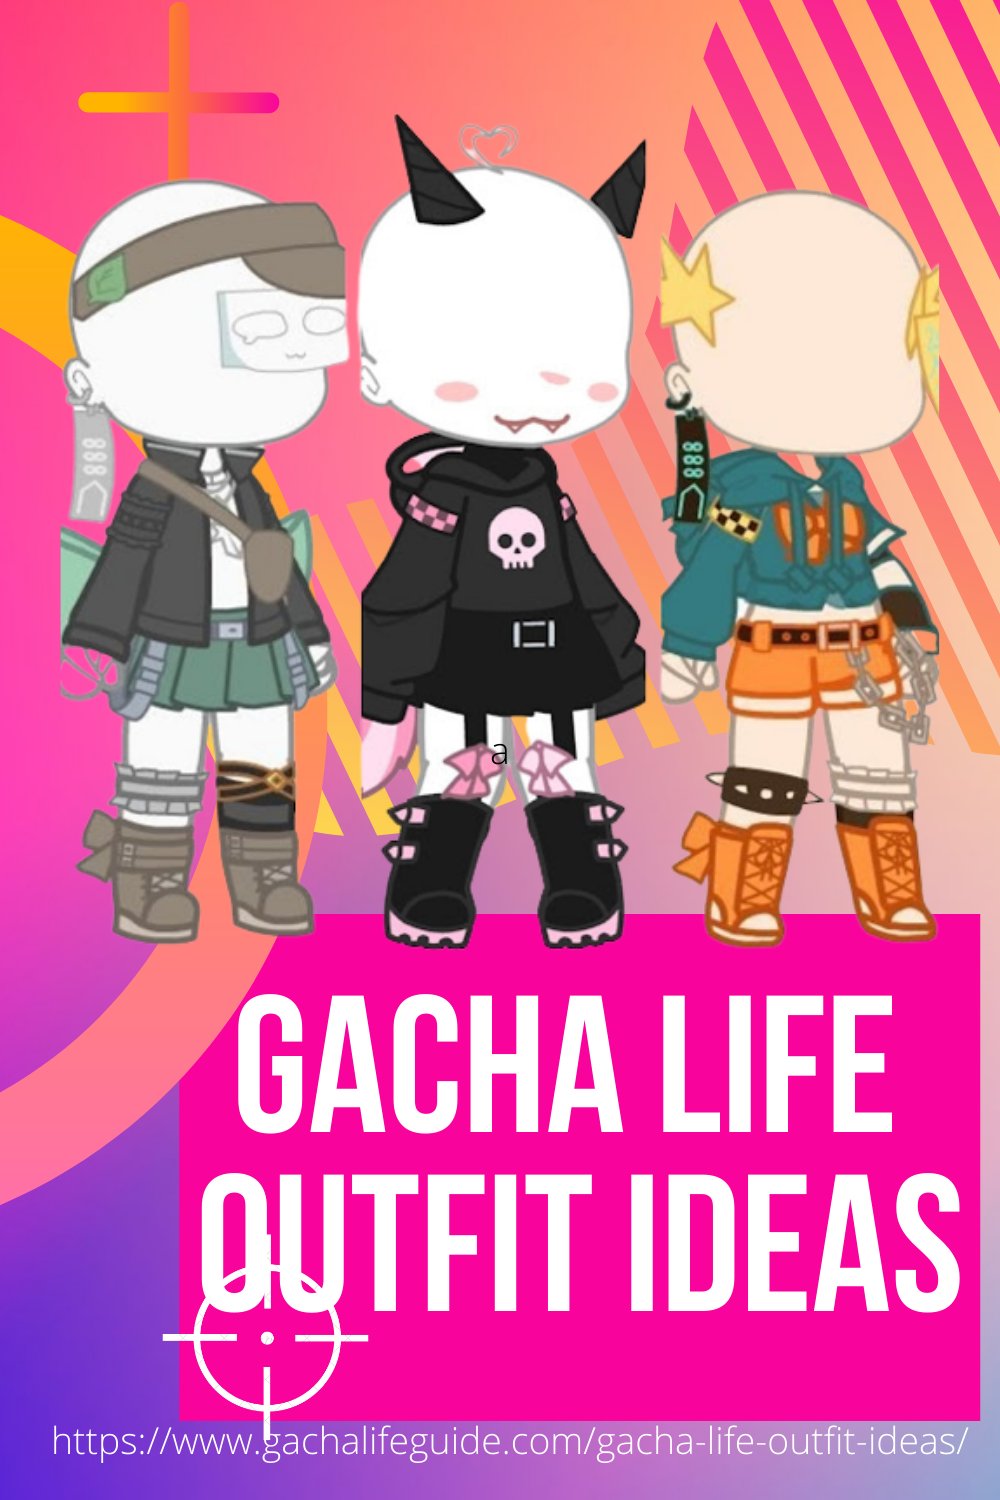 Gacha Life Guide (@GuideGacha) / X